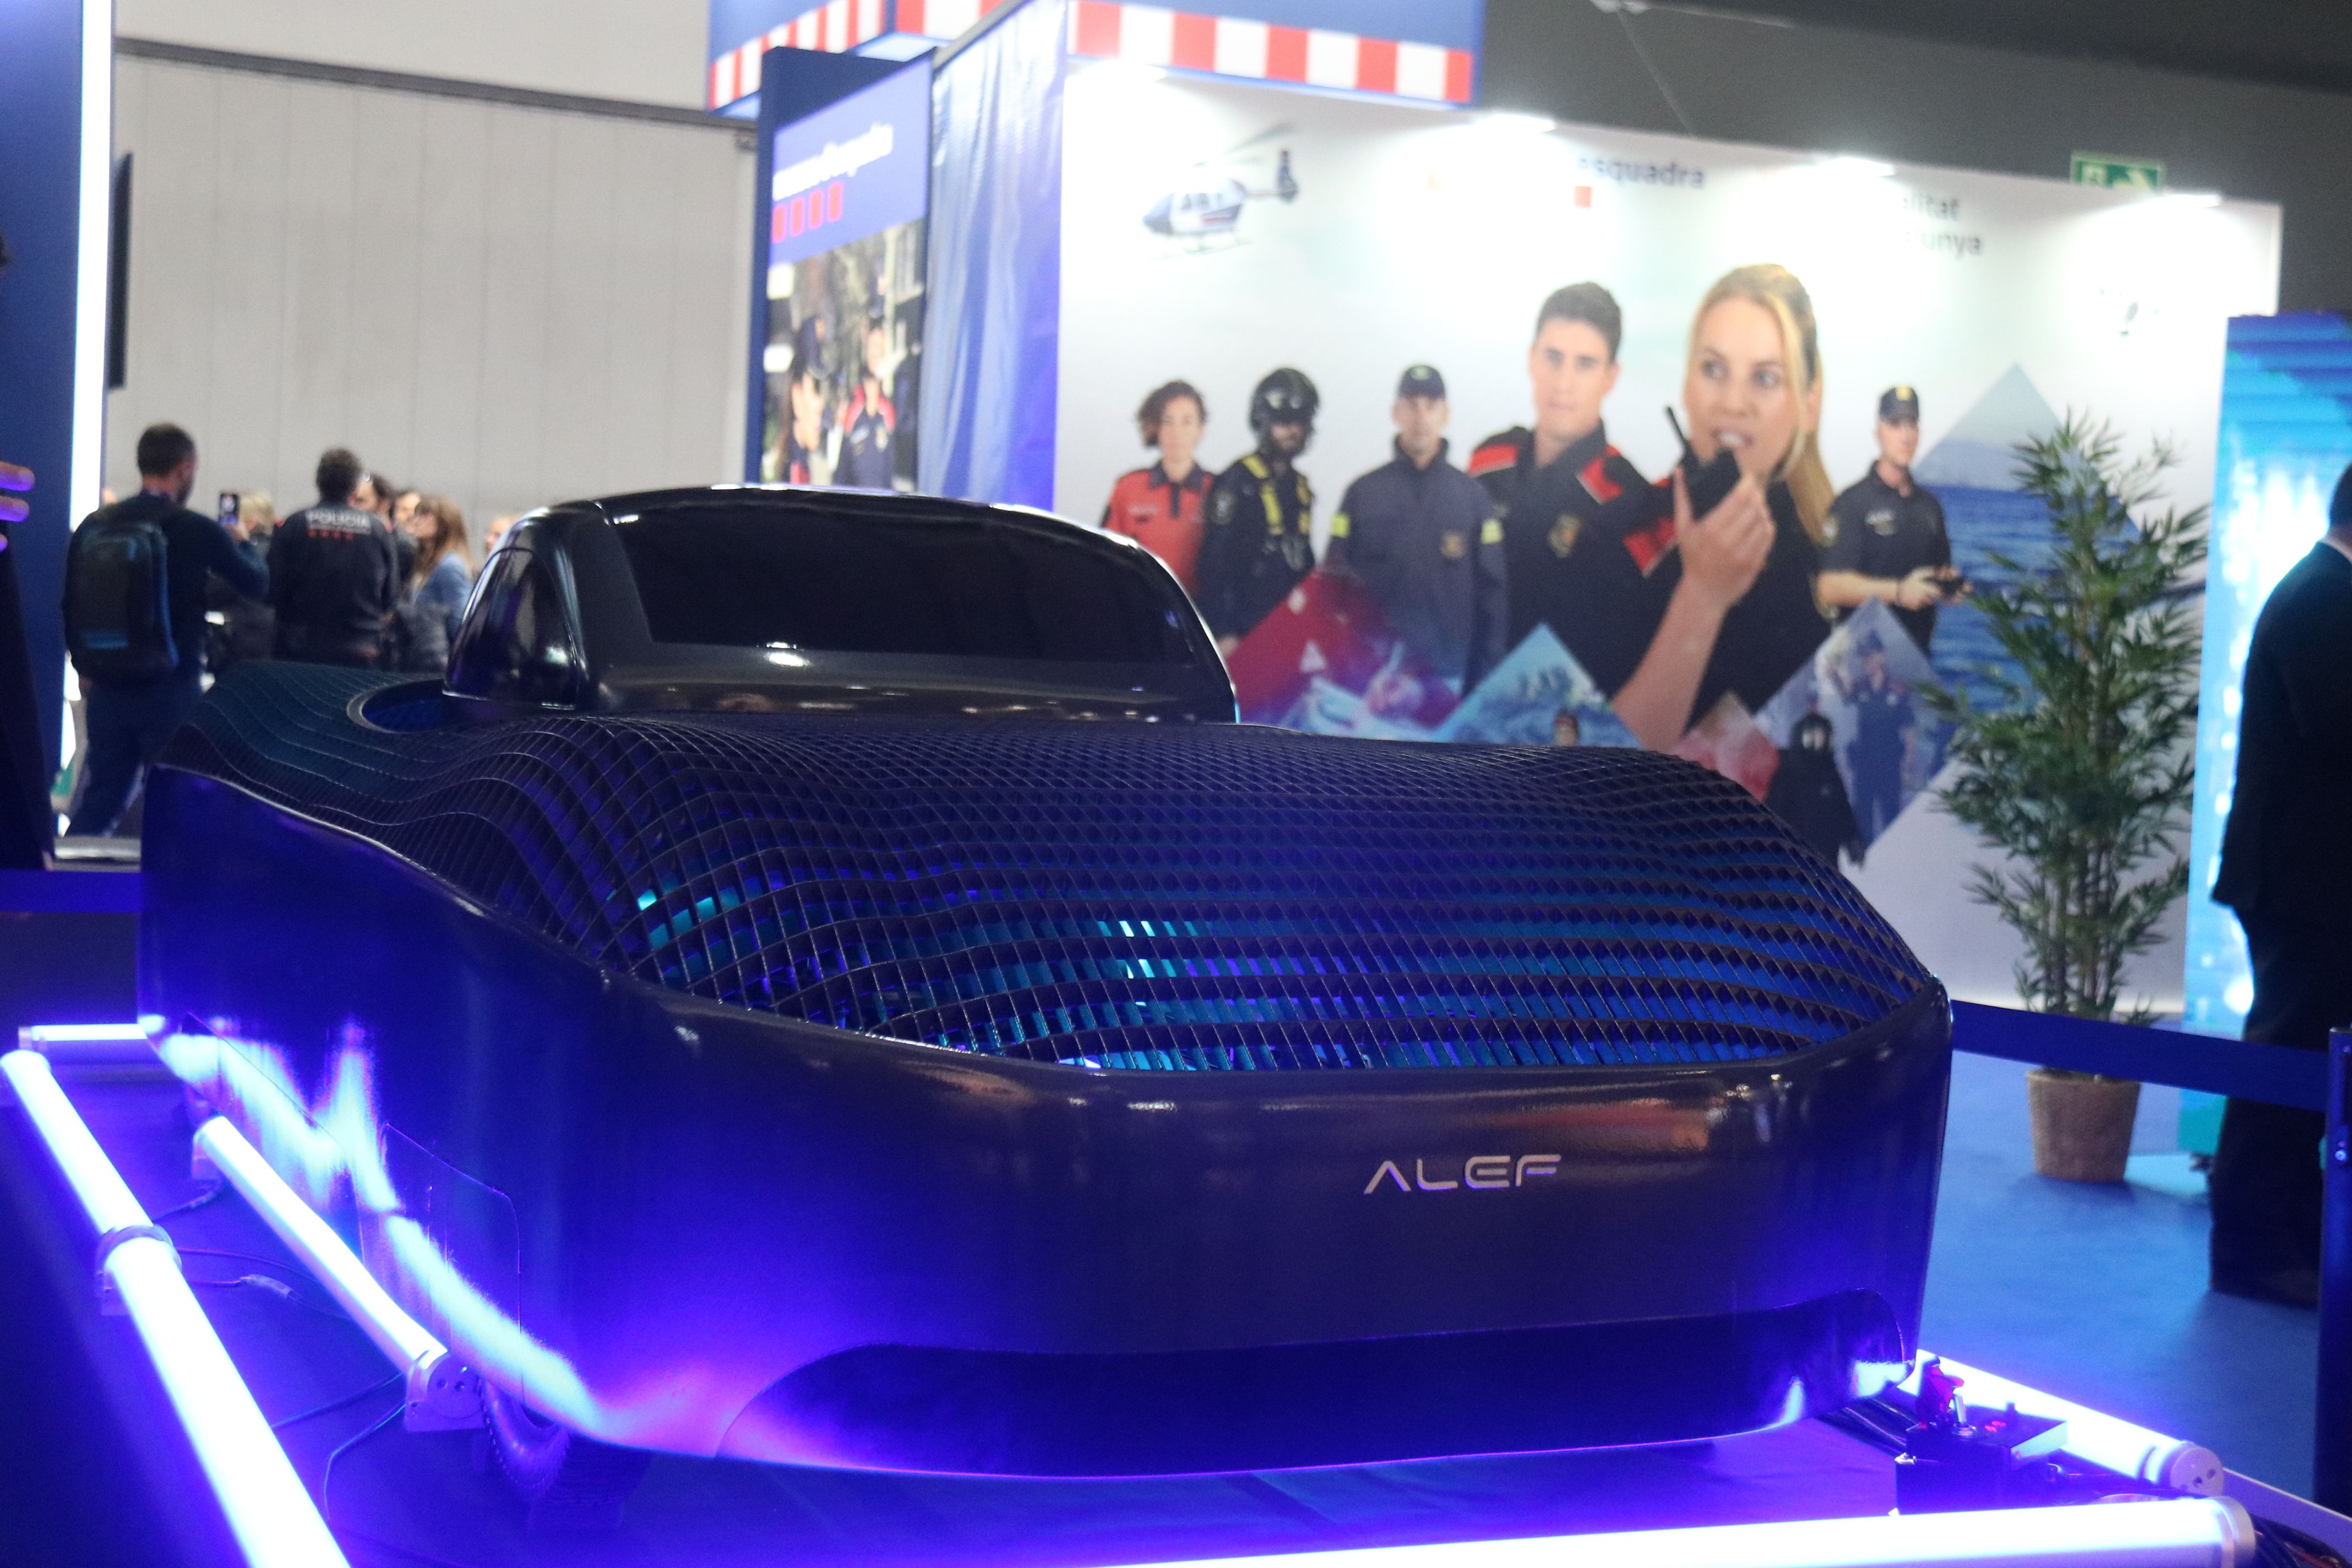 Protip de cotxe volador d'Alef exposat al Mobile World Congress  | ACN